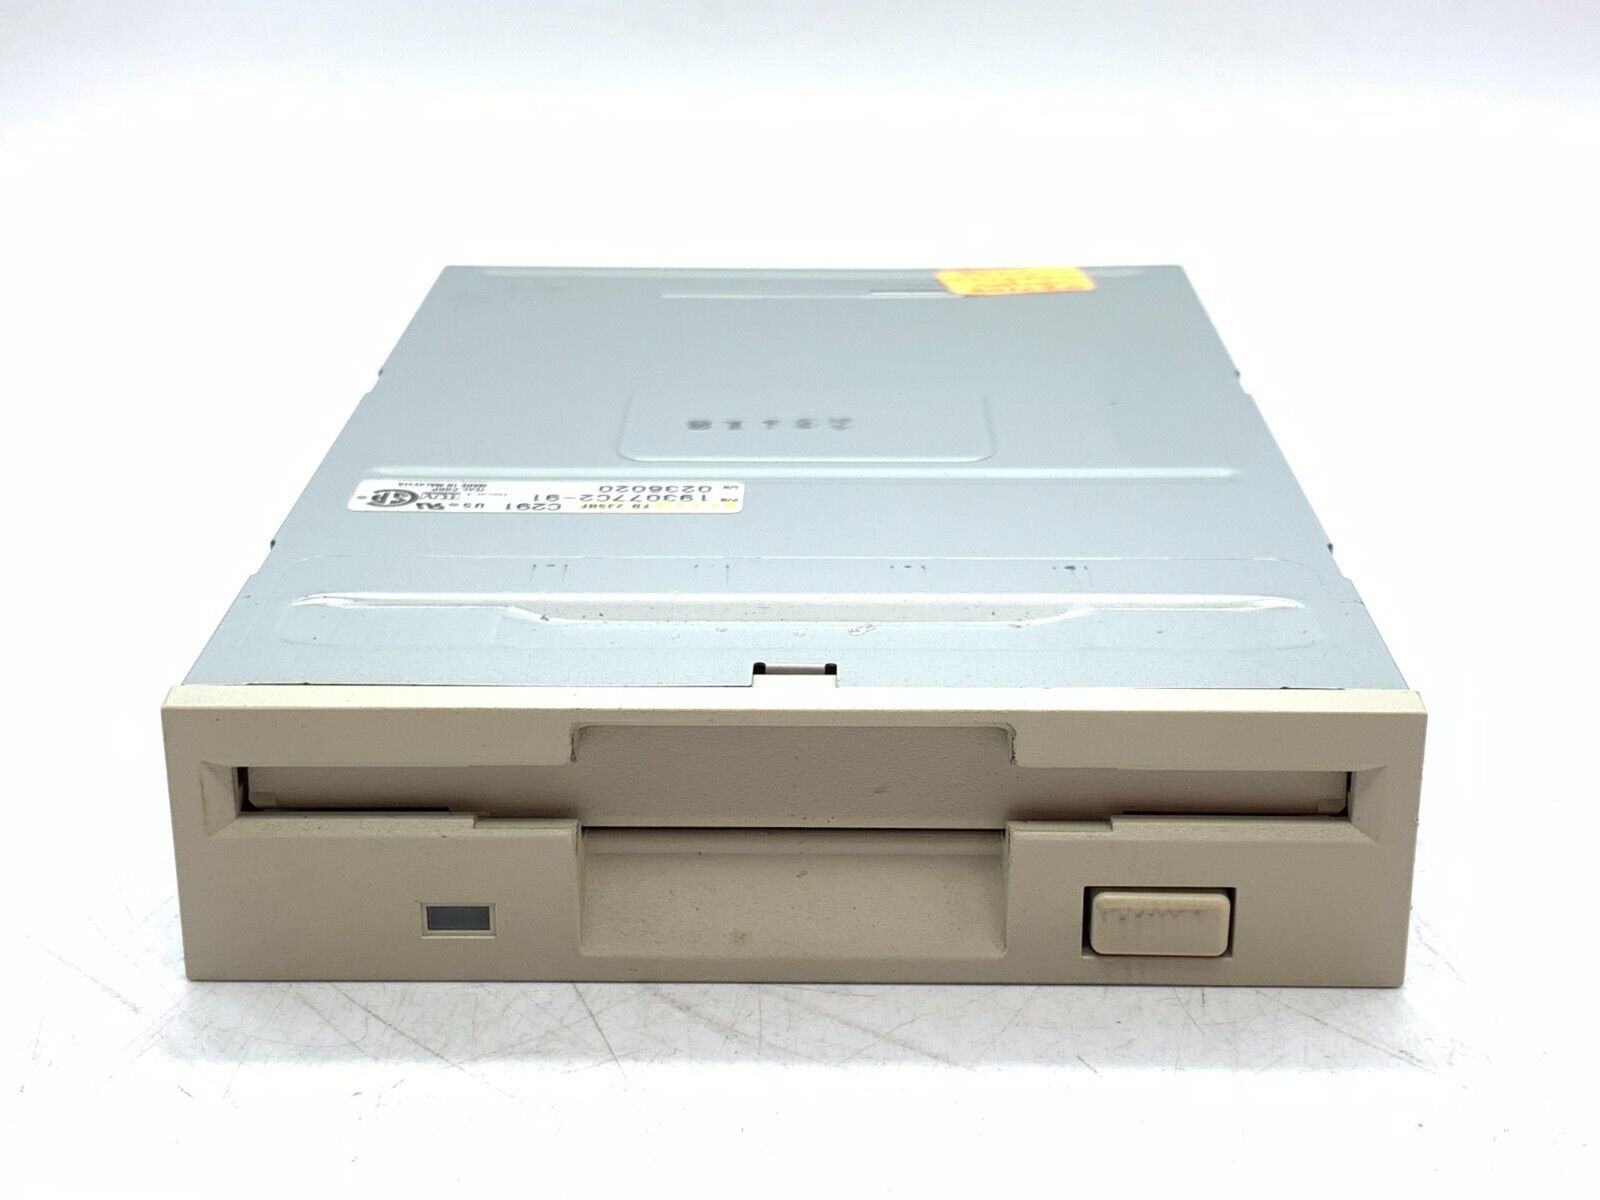 Vintage Teac FD-235HF 1.44 MB 3.5 inch Desktop Internal Floppy Drive